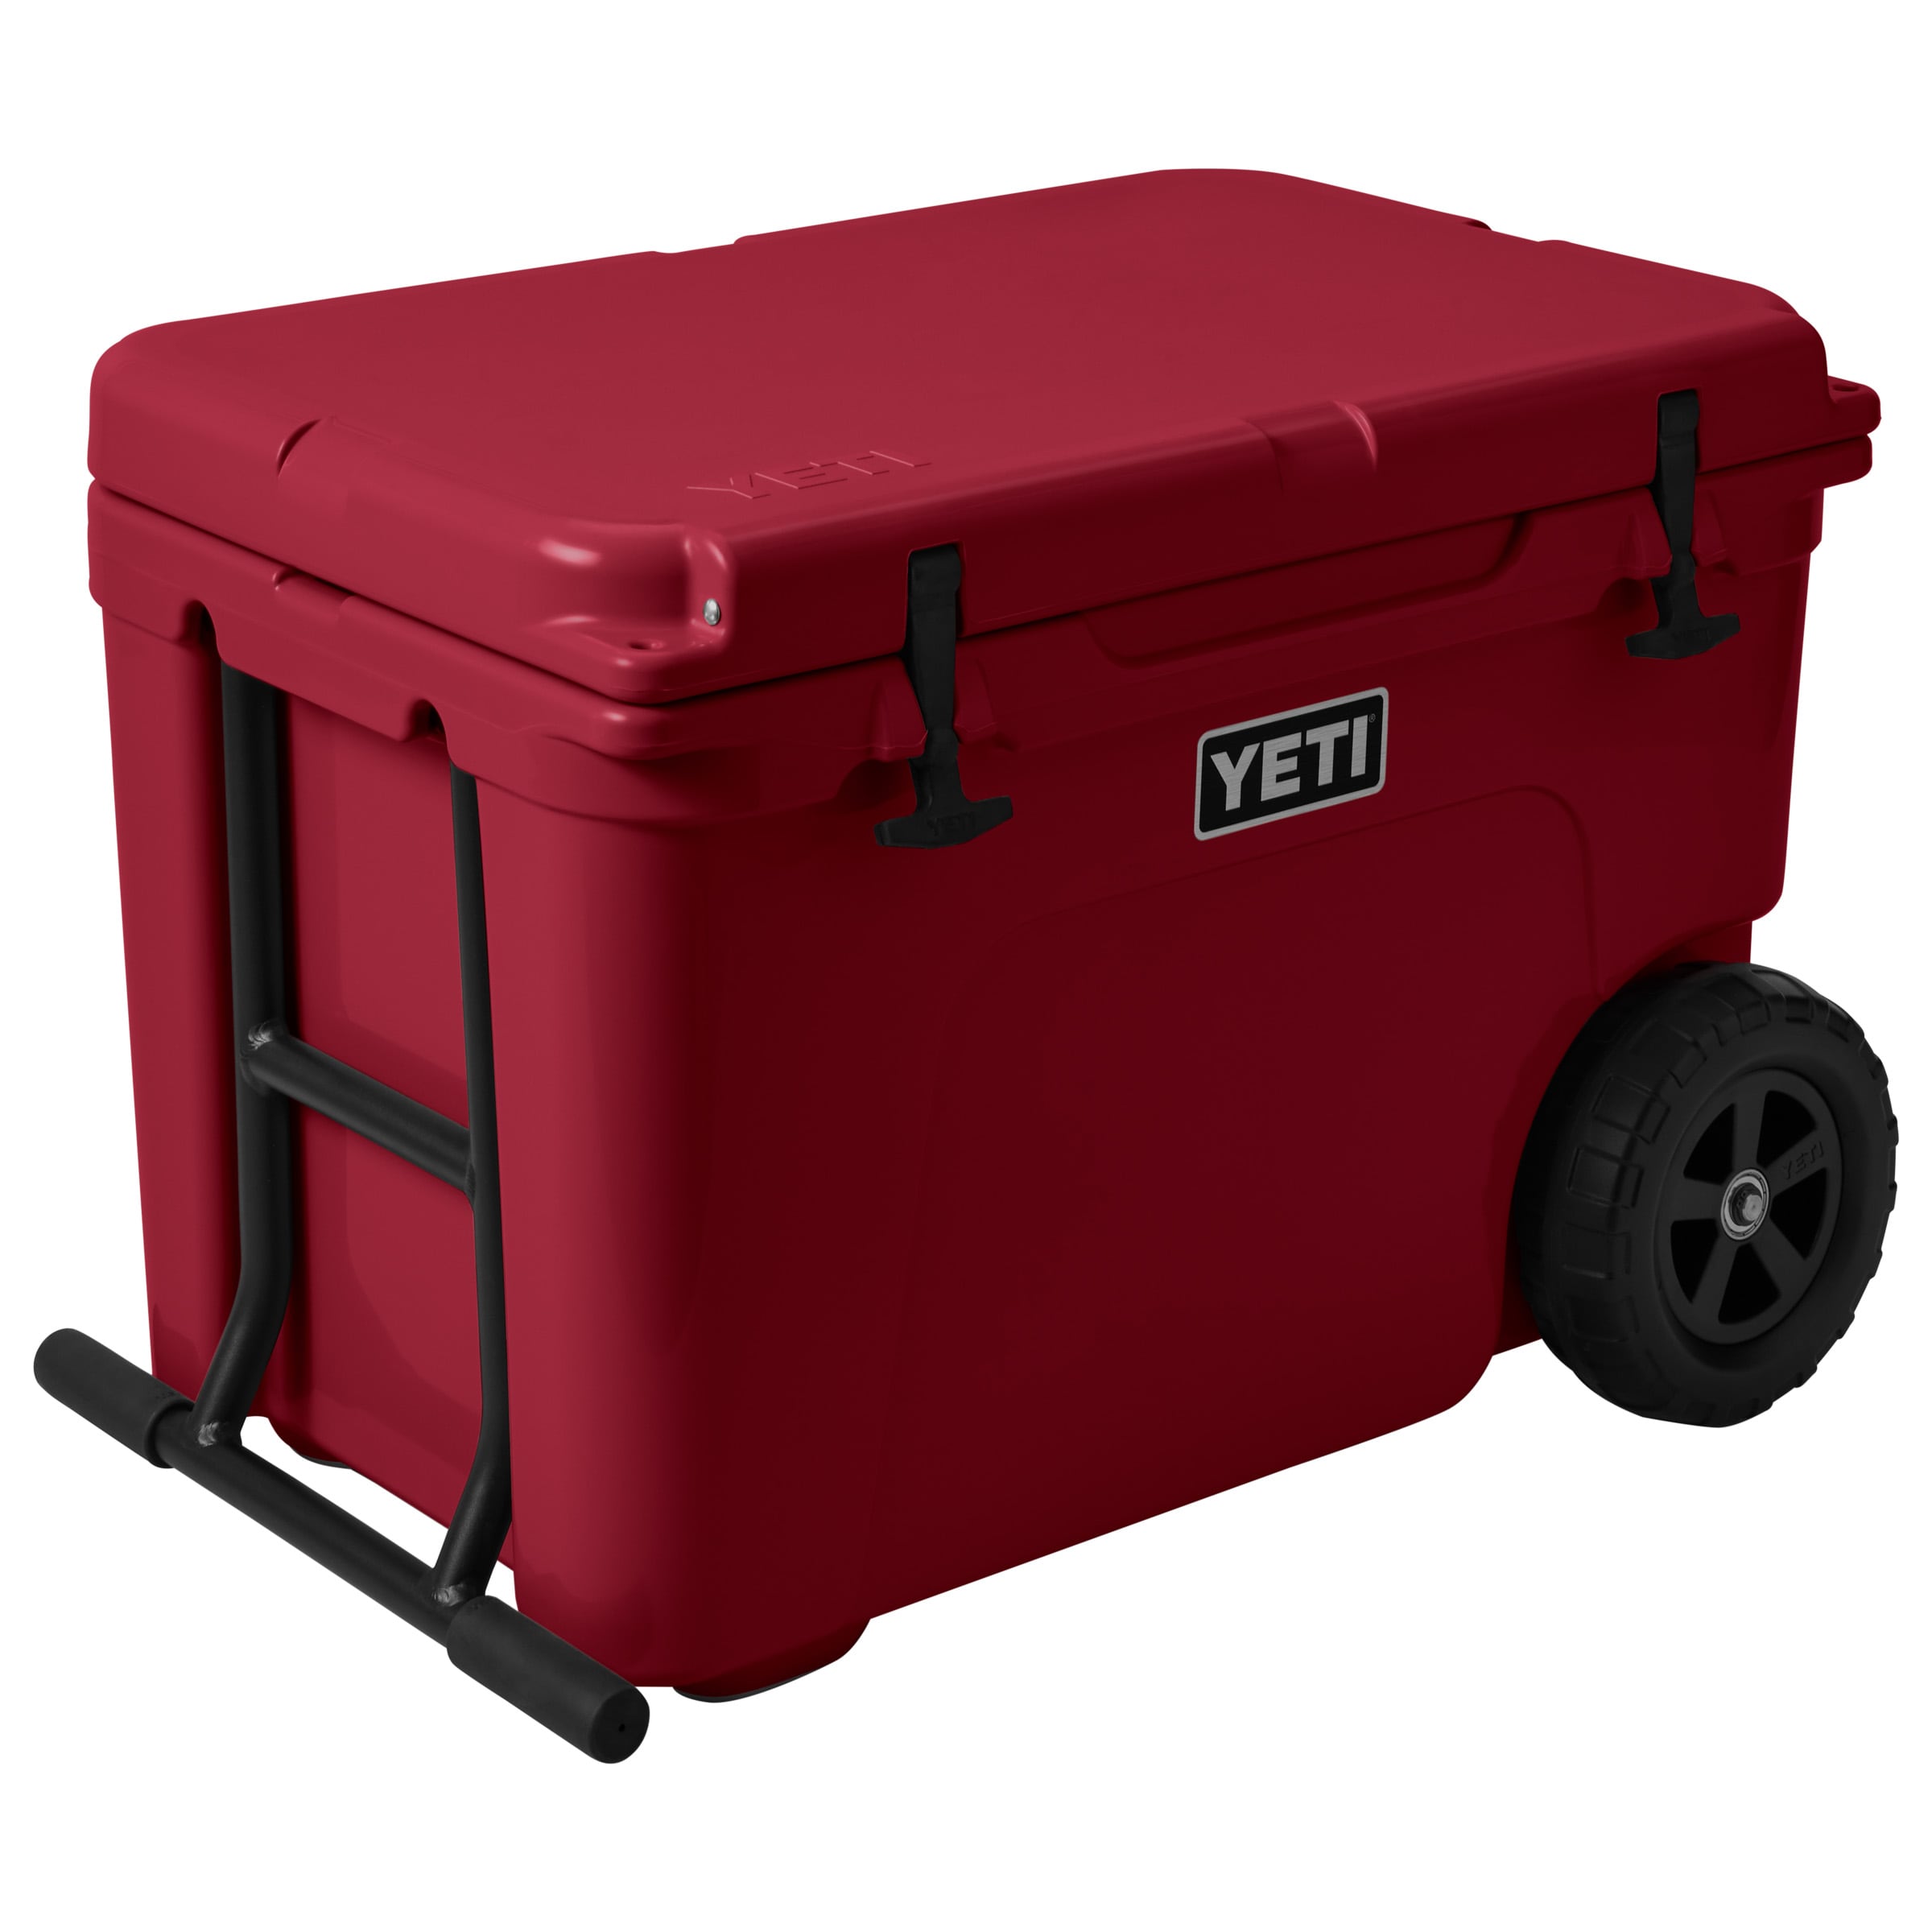 Yeti Rambler Series 21071501682 Can Cooler, 4.9 in H x 3.